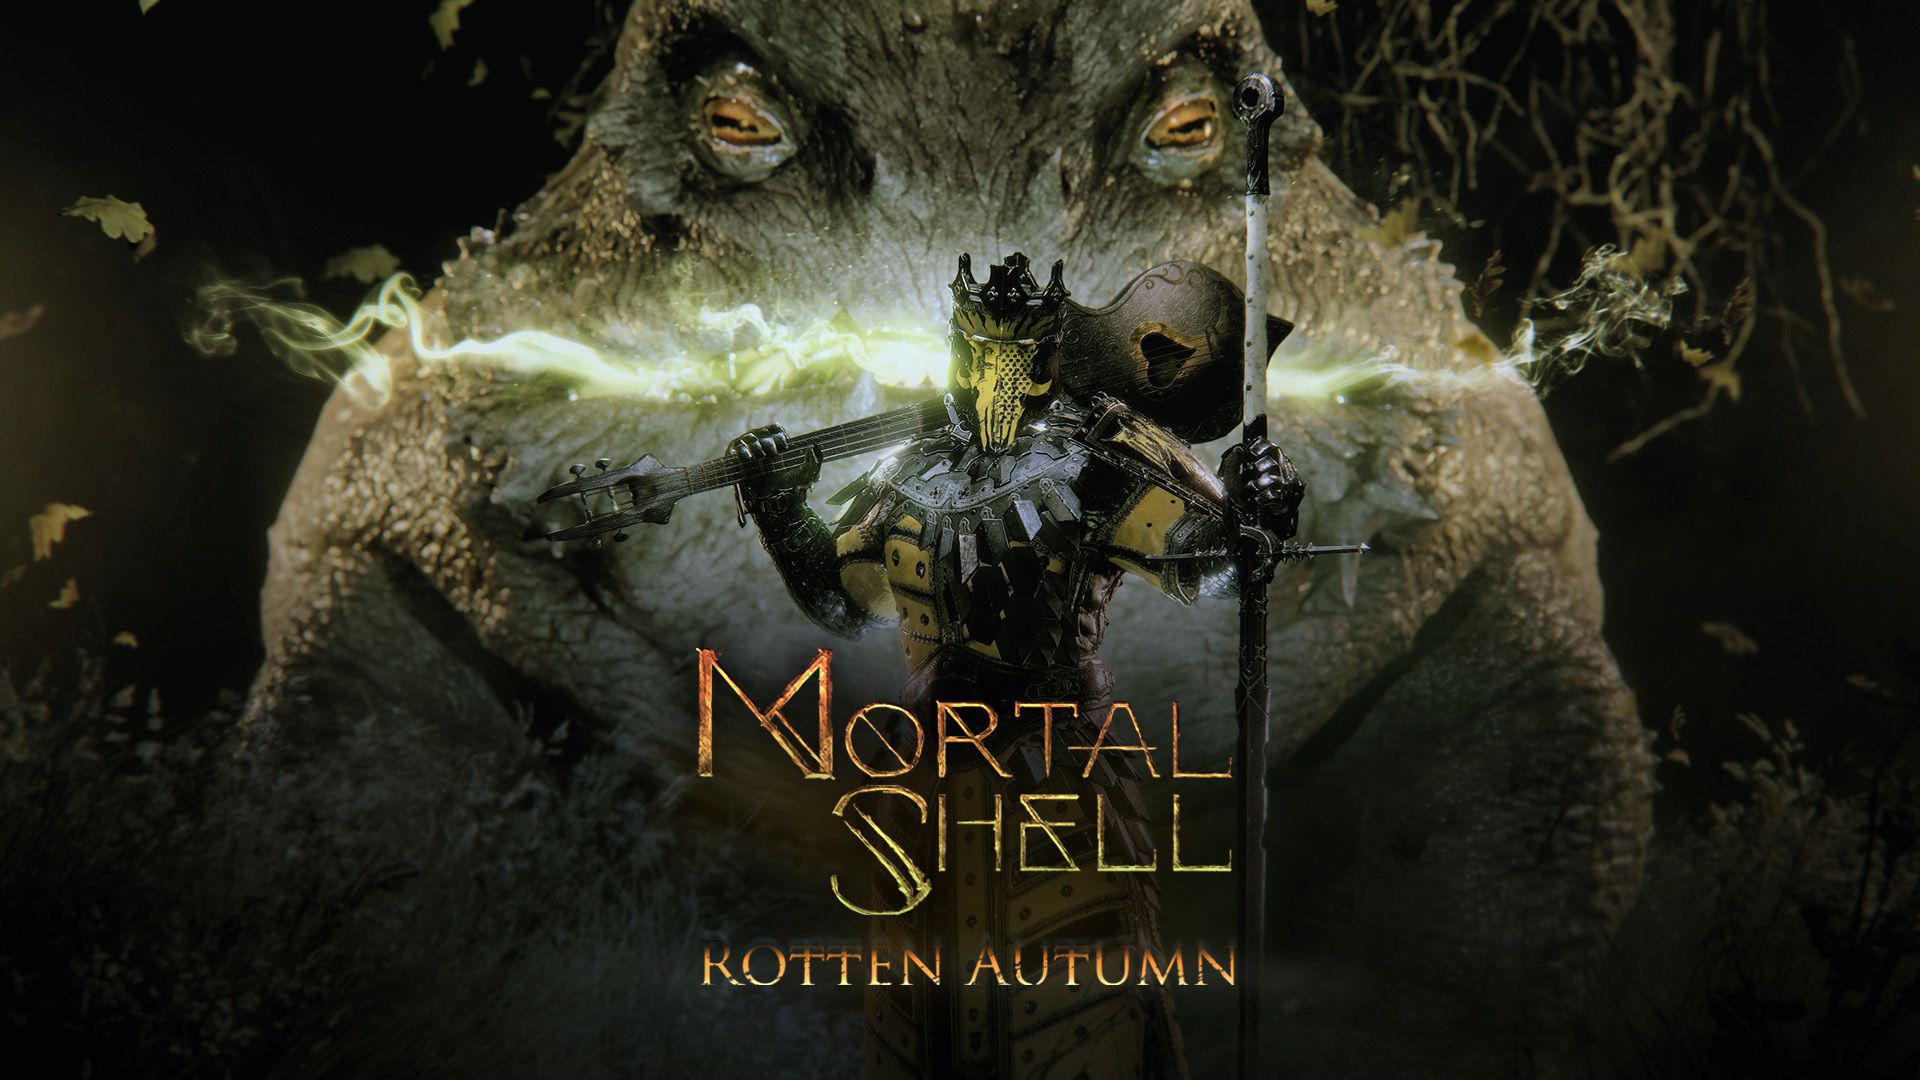 I-Mortal Shell Rotten Autumn Update